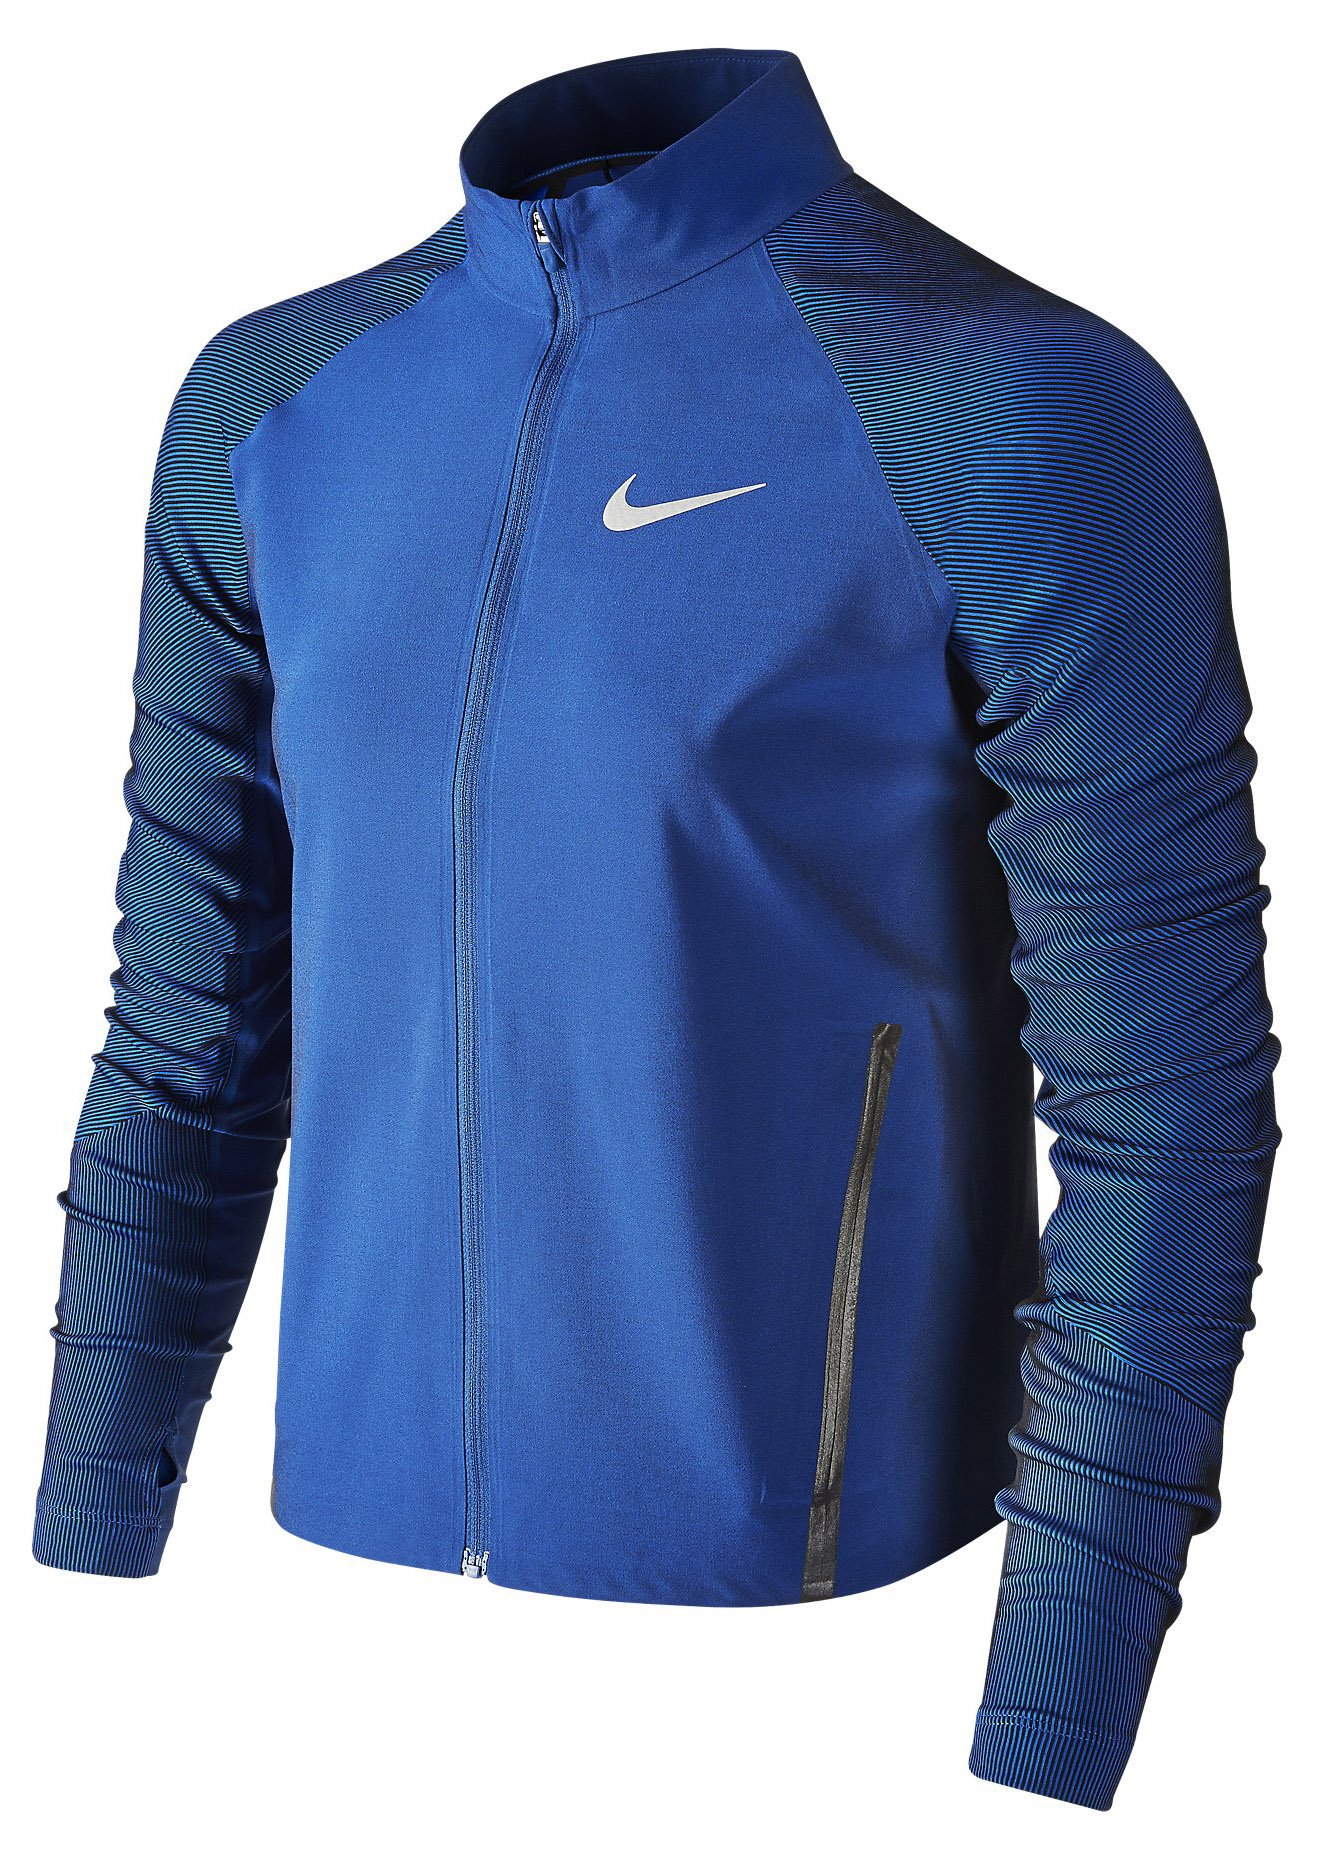 Dámská běžecká bunda Nike Jacket Stadium